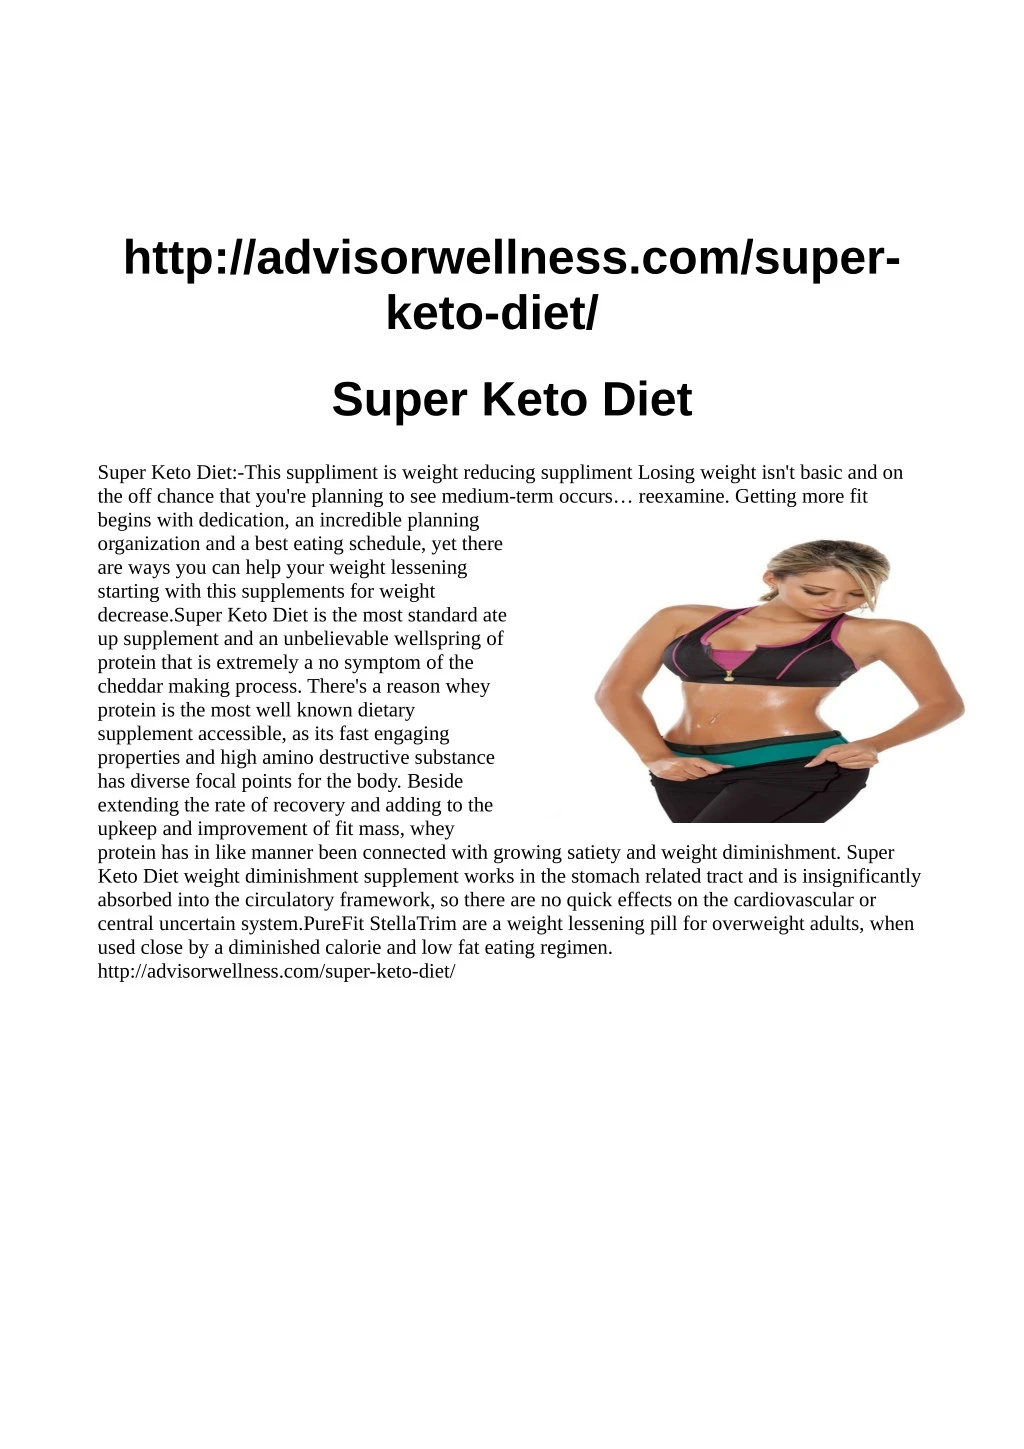 http advisorwellness com super keto diet n.